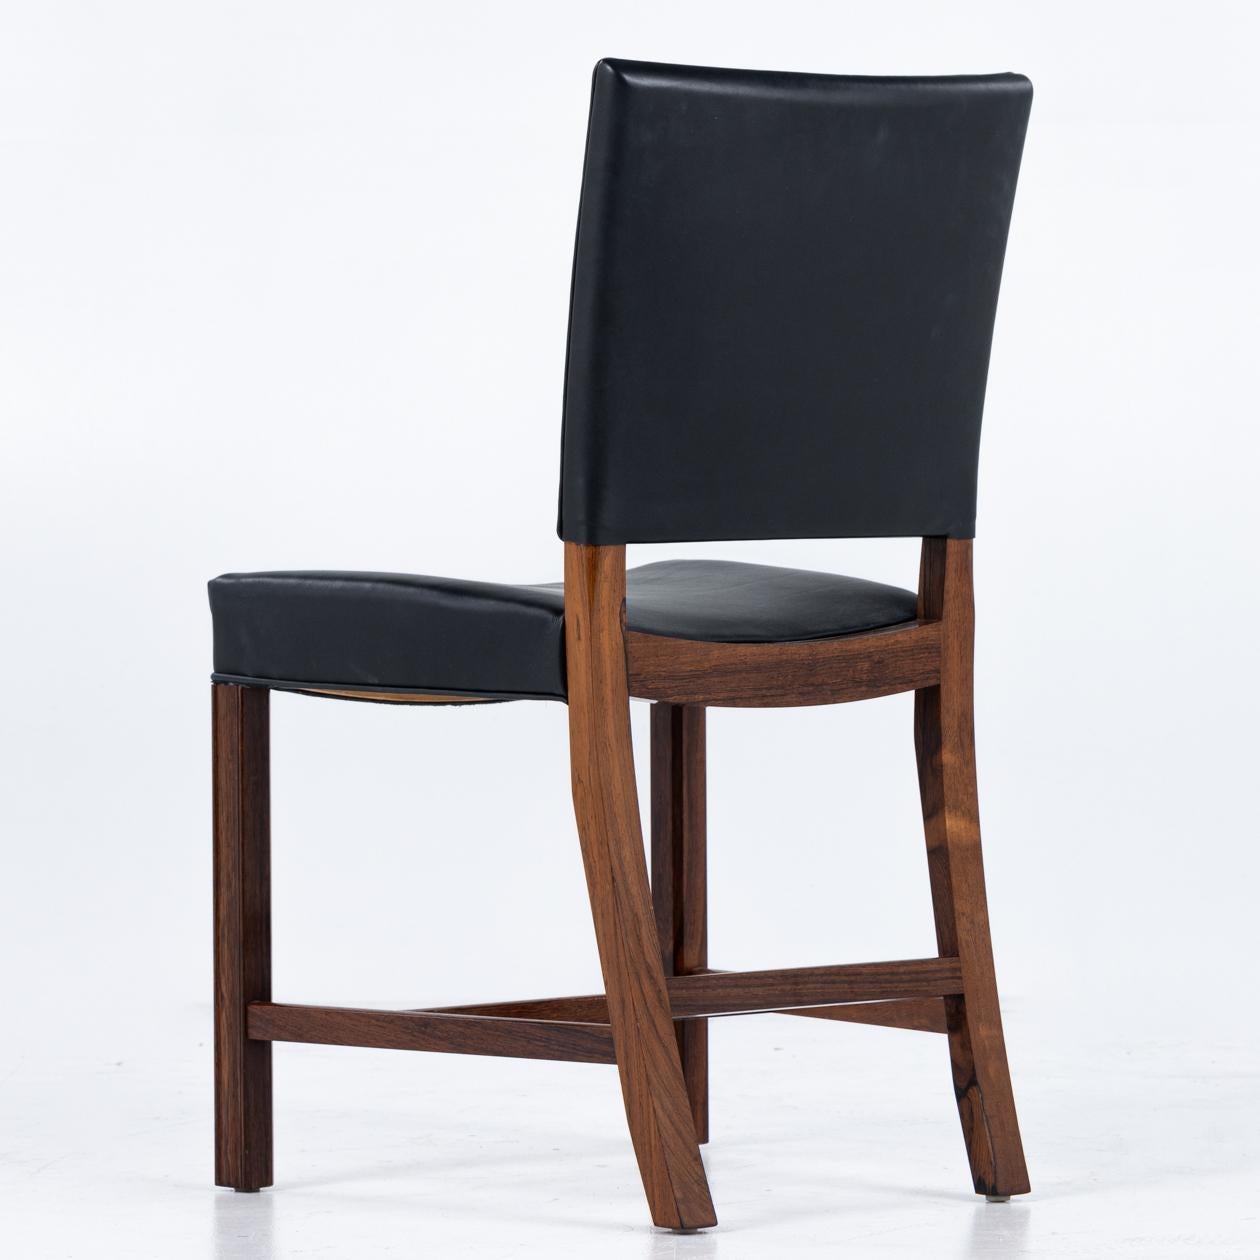 KK 3949 set of six chairs in rio rosewood and black leather. Kaare Klint / Rud. Rasmussen. 